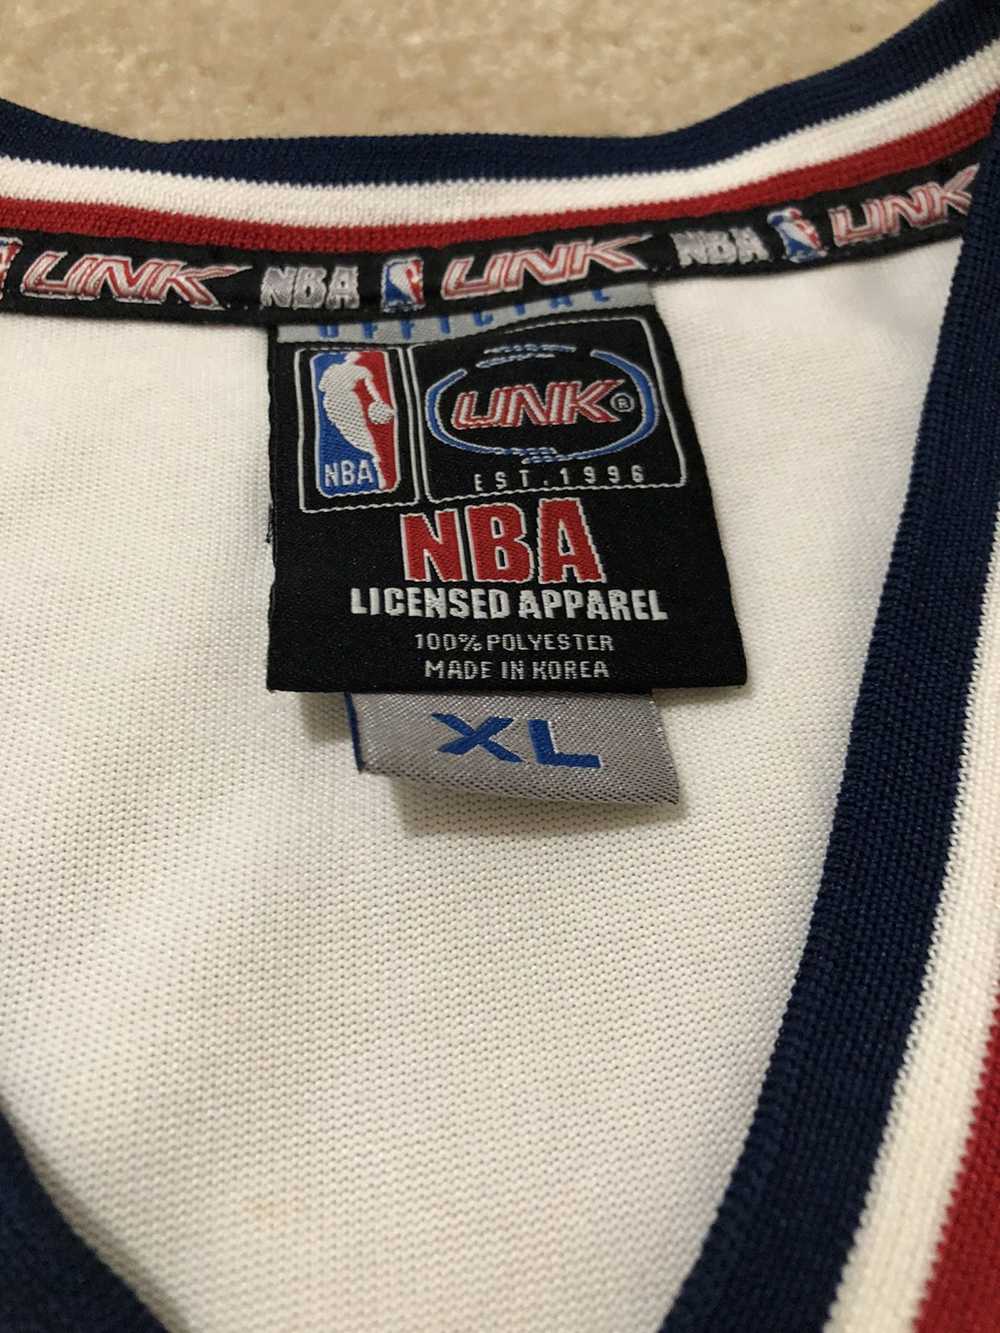 NBA NBA x UNK all star jersey - image 3